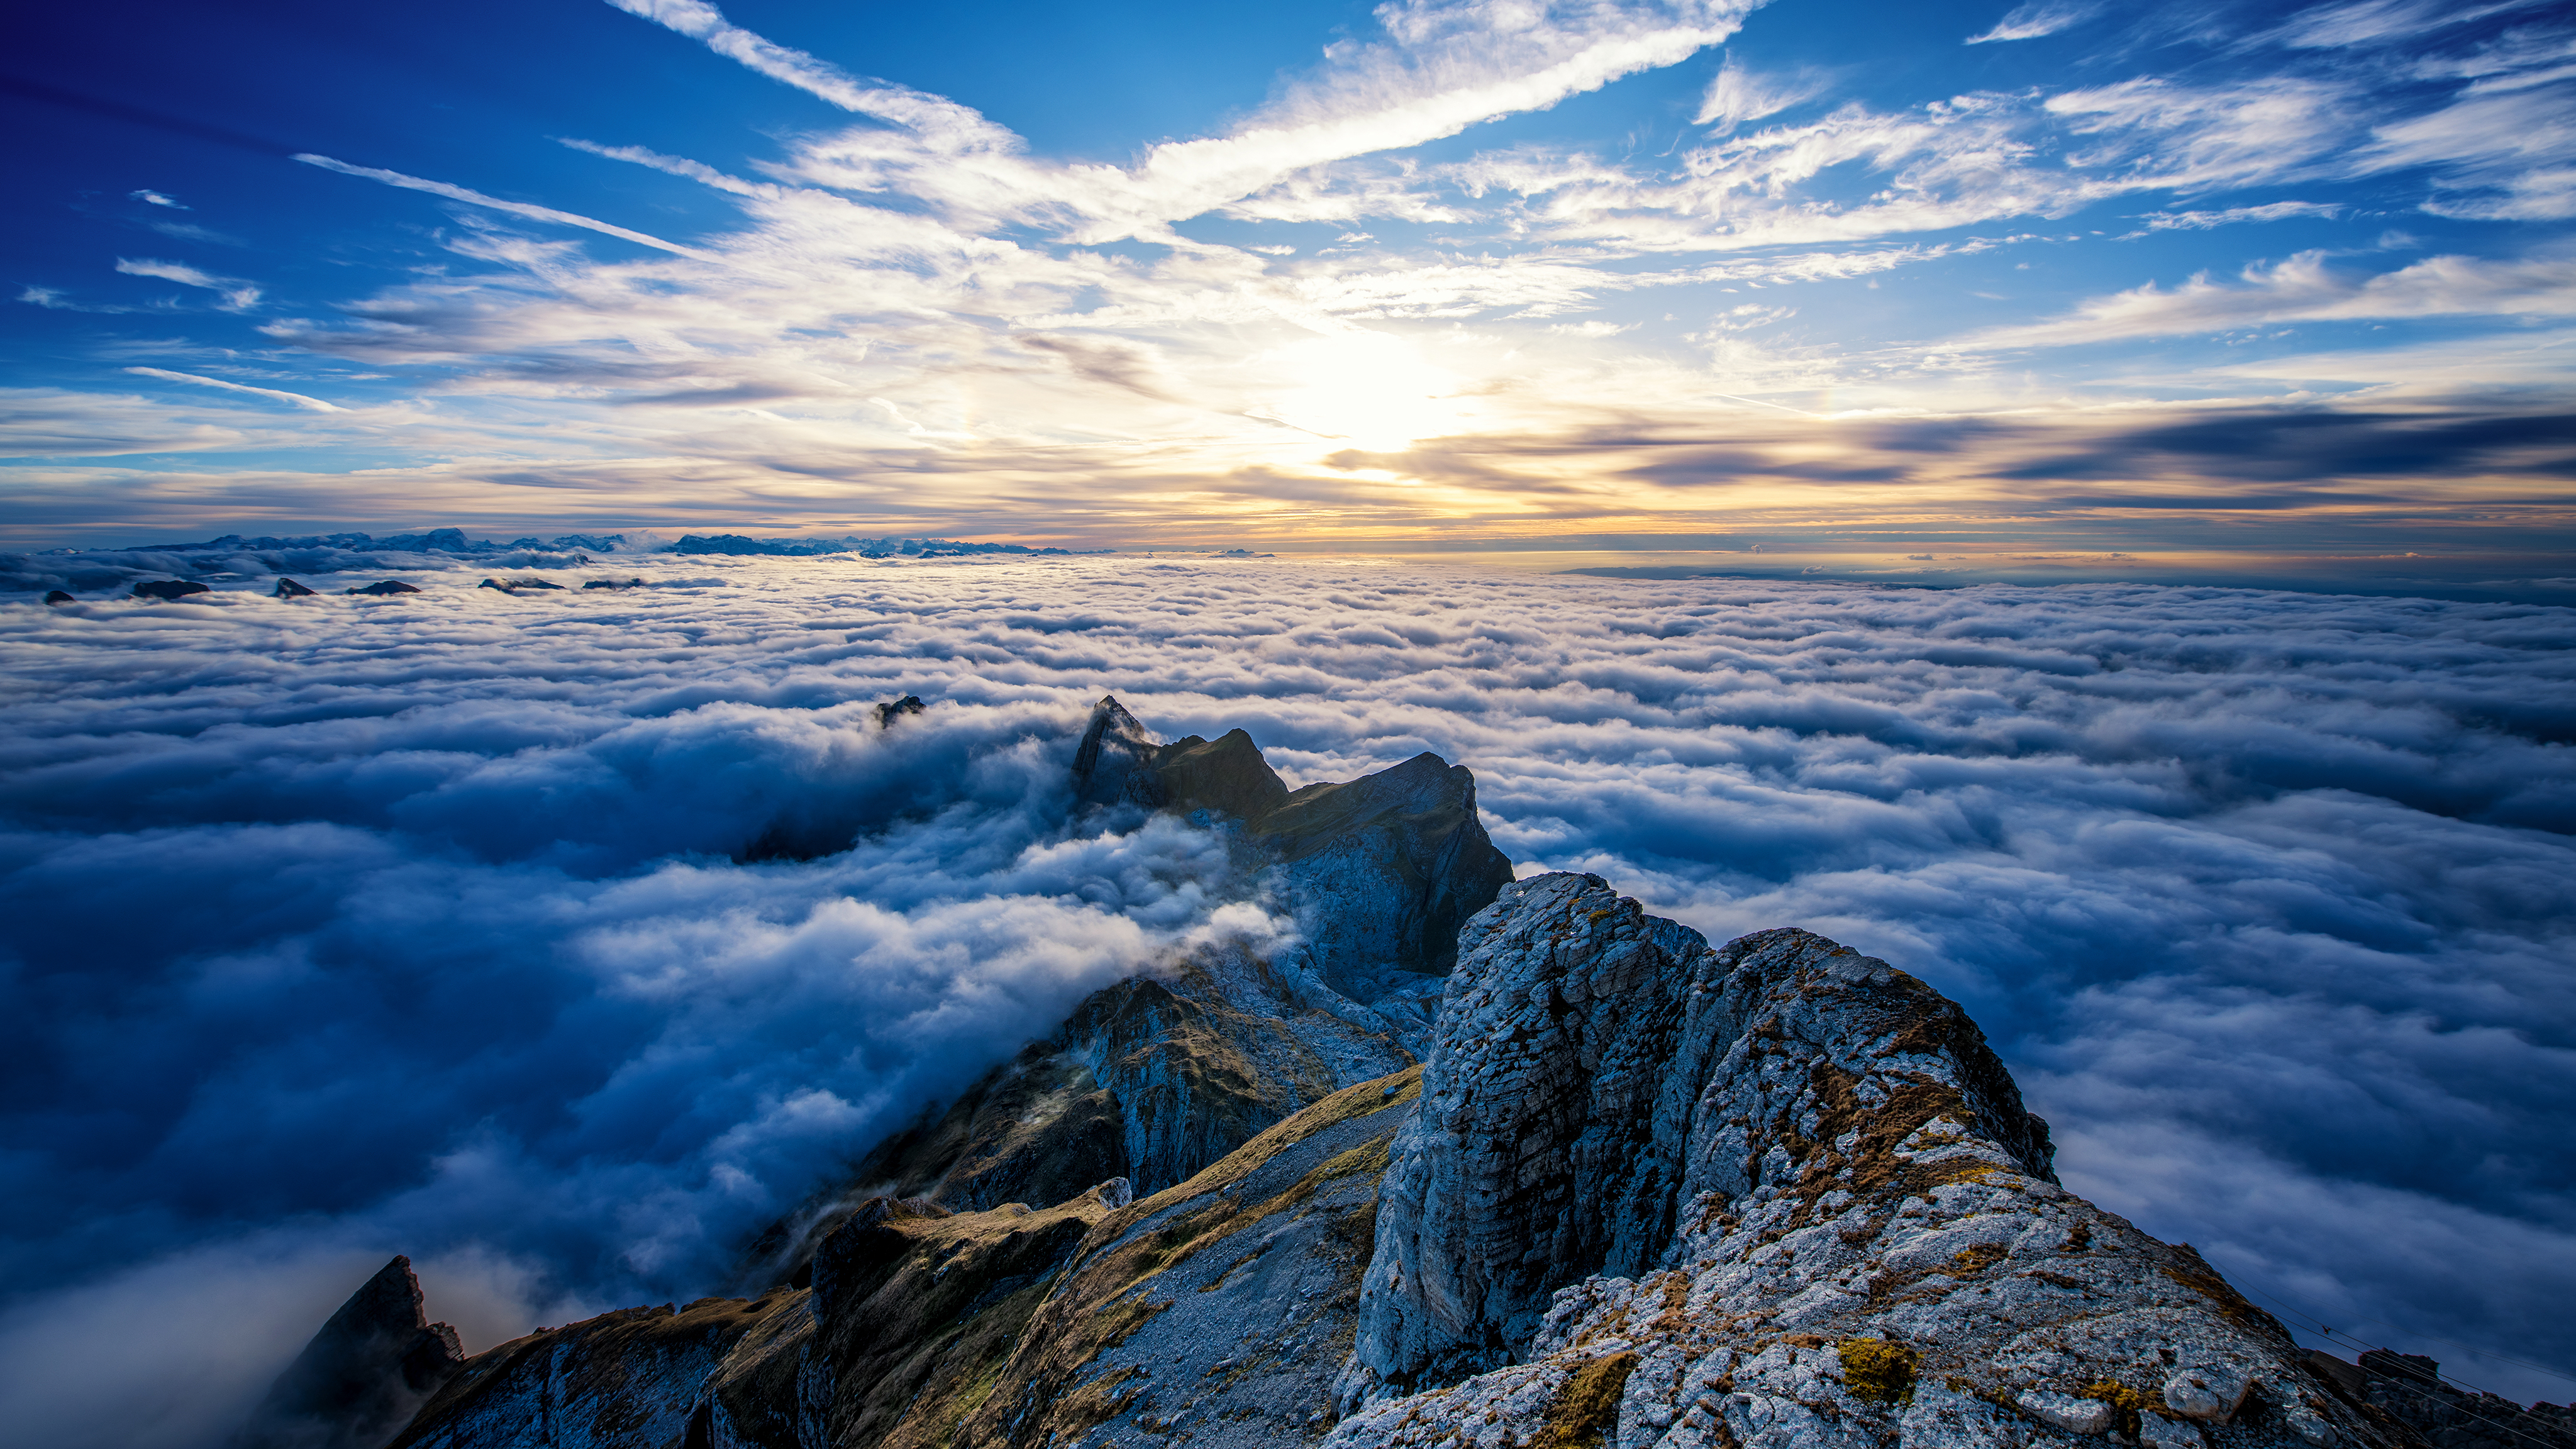 General 4096x2304 landscape clouds mountains Dominic Kamp sky nature rocks sunlight Switzerland